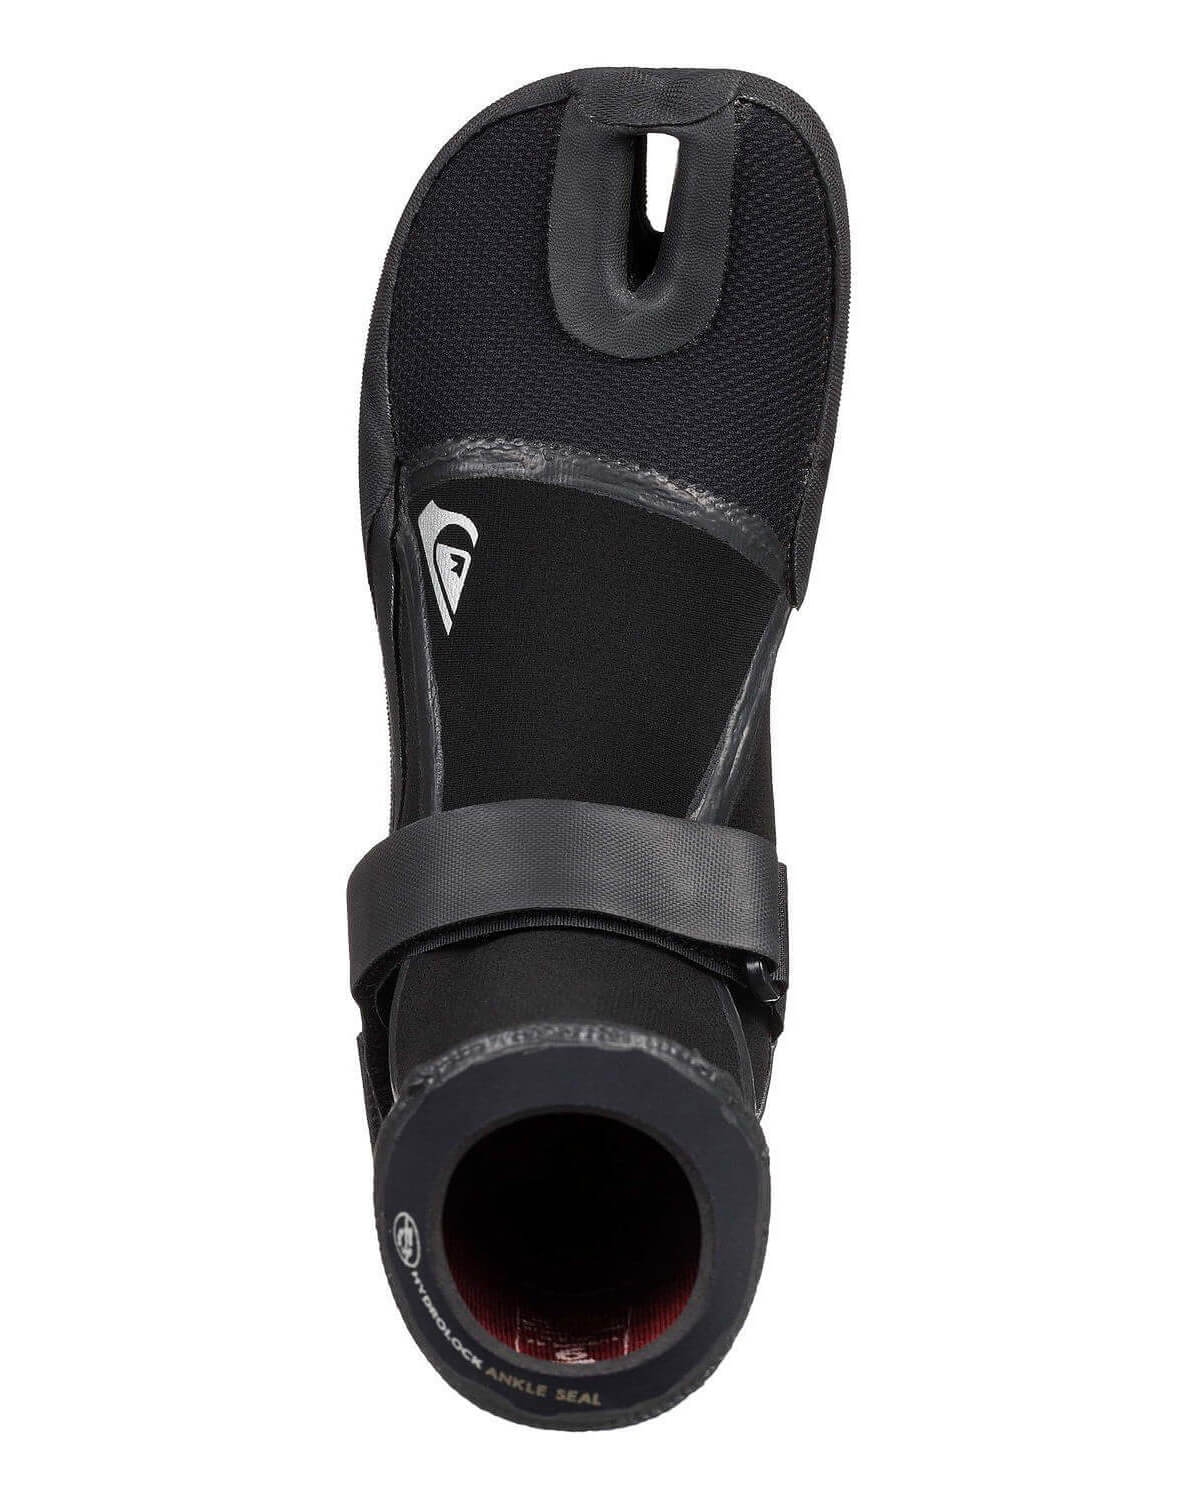 3mm Quiksilver HLINE Performance Split Toe Boot